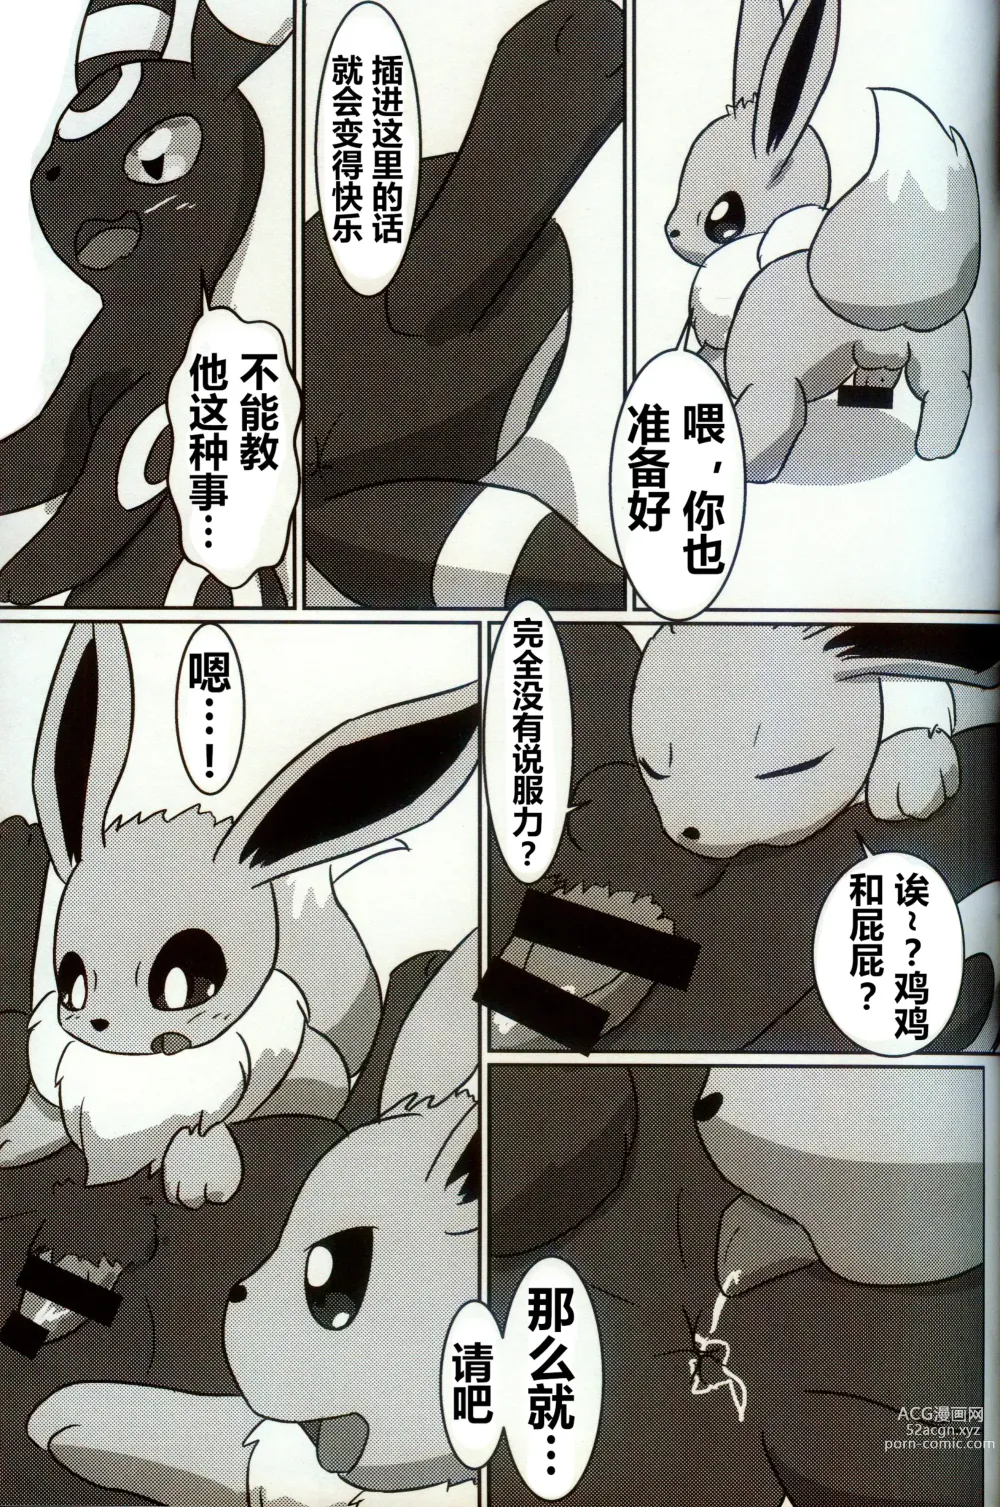 Page 13 of doujinshi 被拜托照顾附近的双胞胎发生了不得了的事...